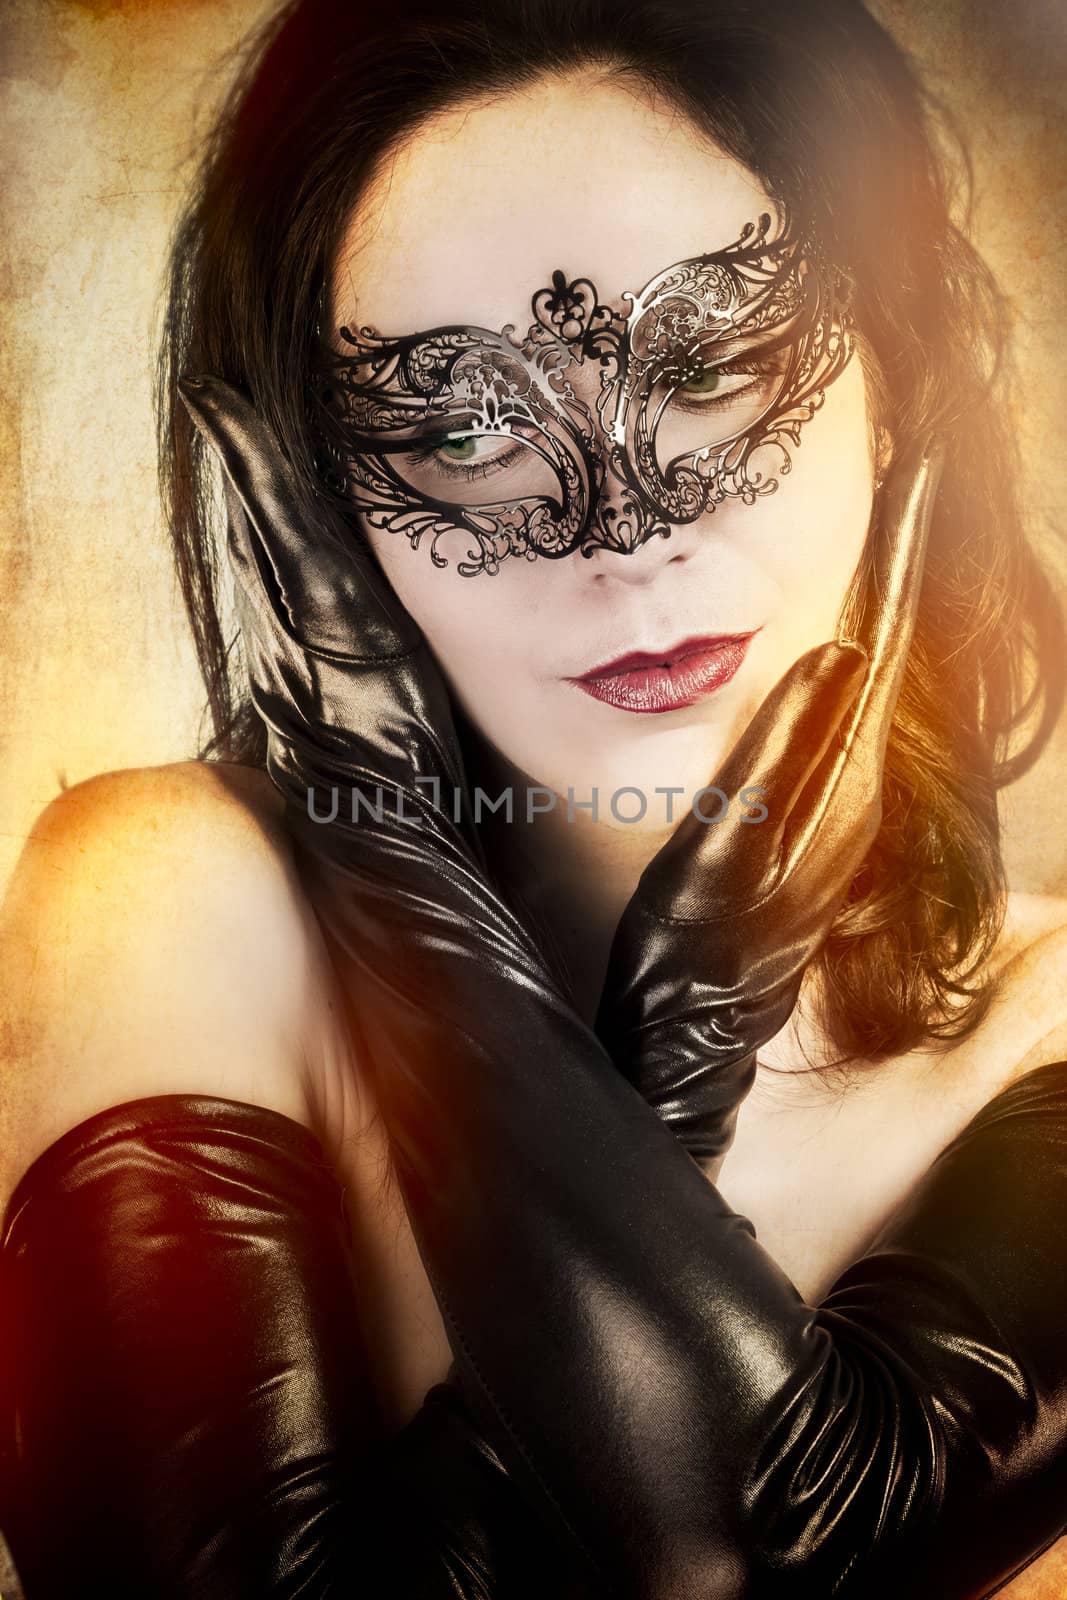 Widow sensual woman with artistic style Venetian mask